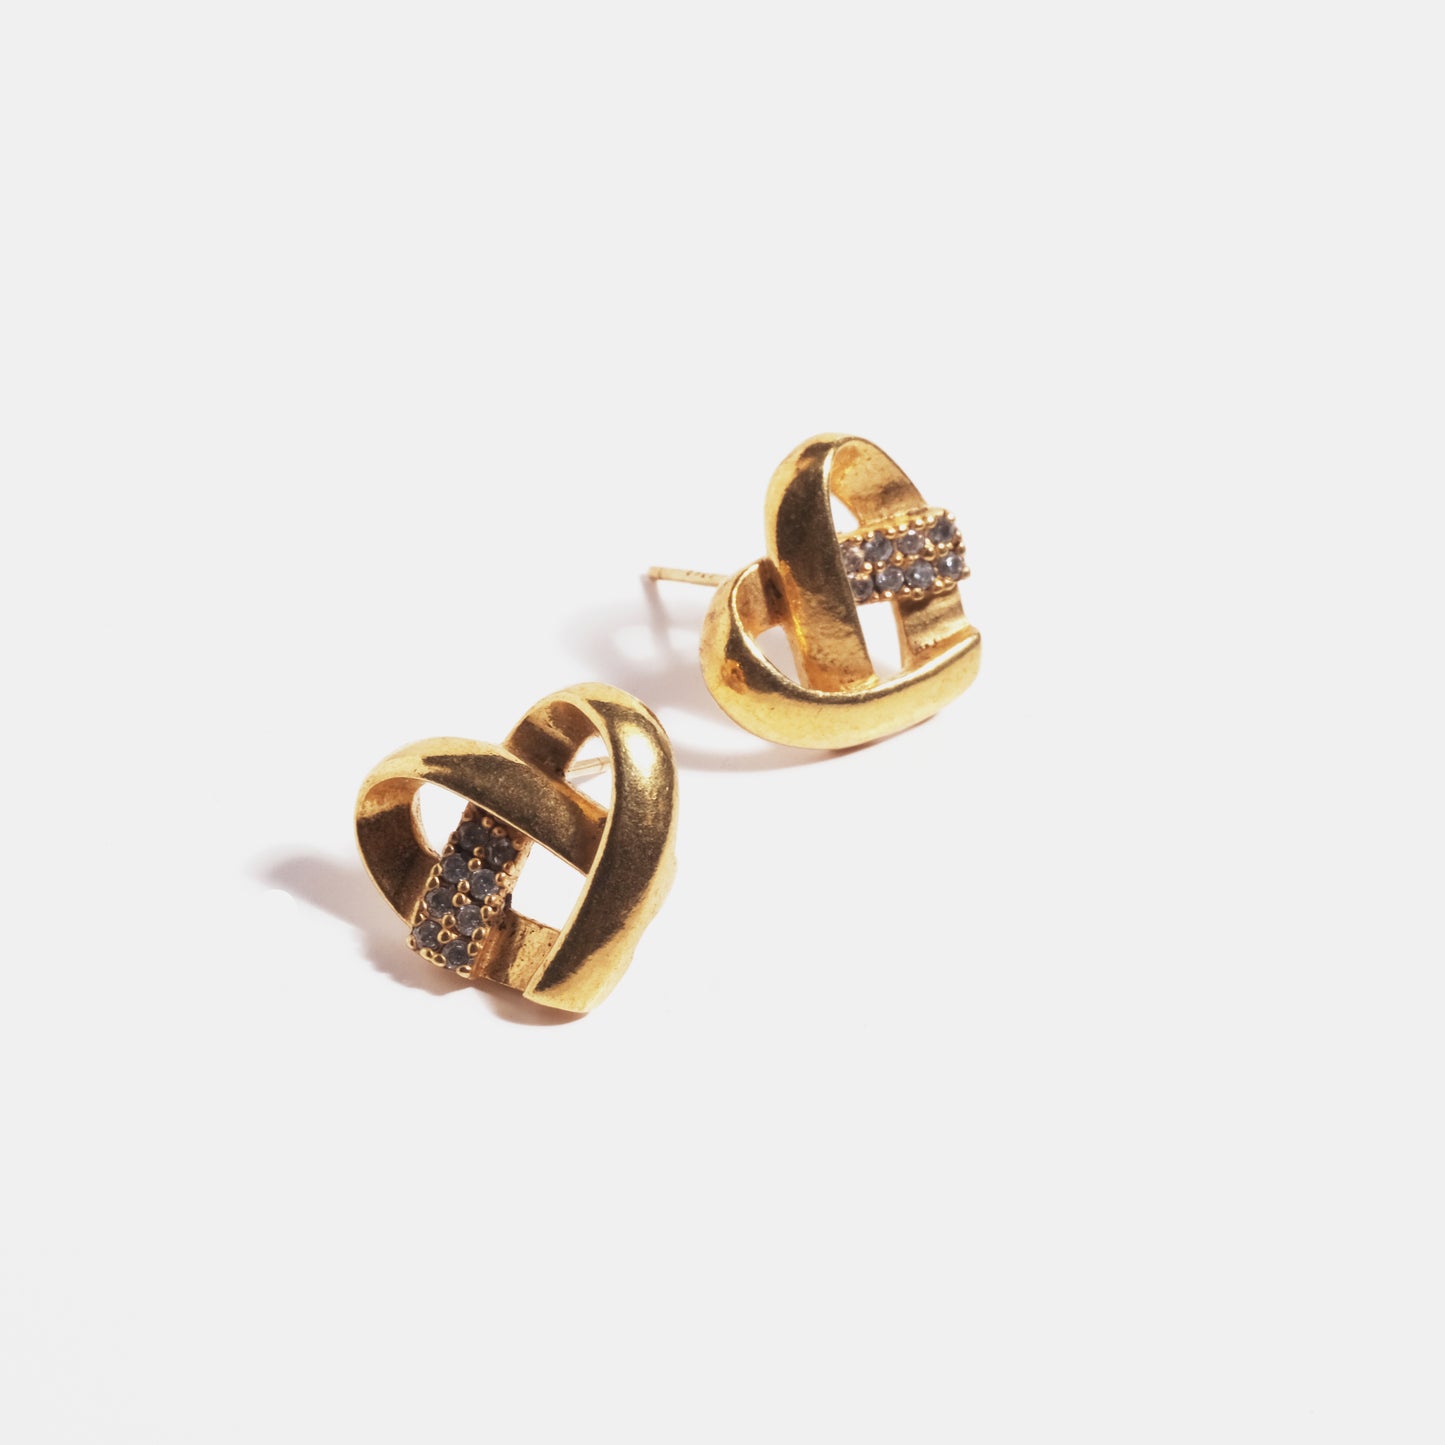 "Nia" earrings